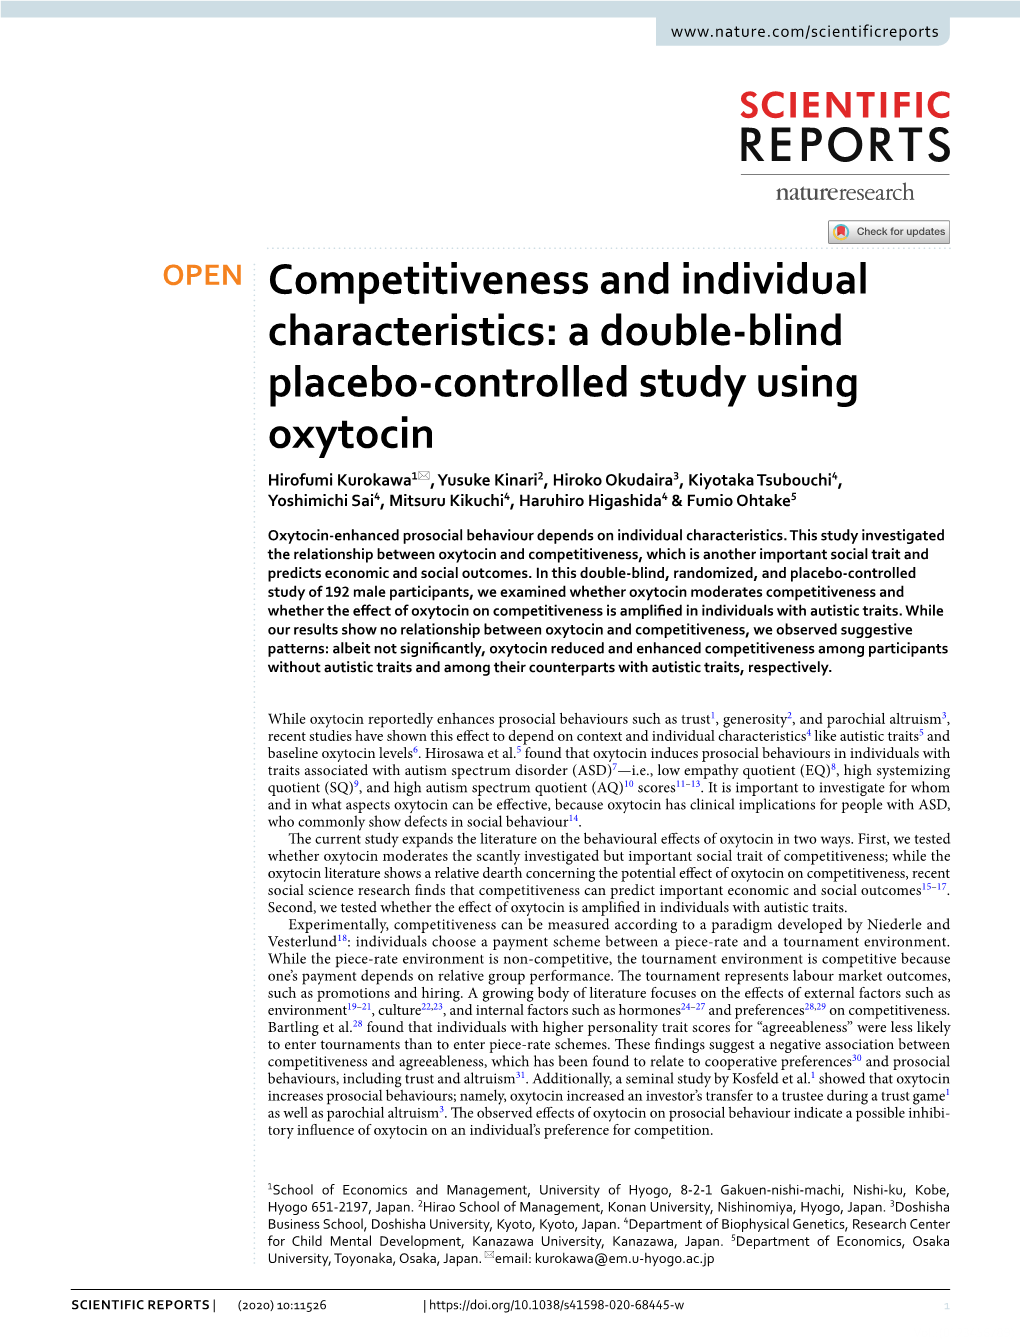 Competitiveness and Individual Characteristics